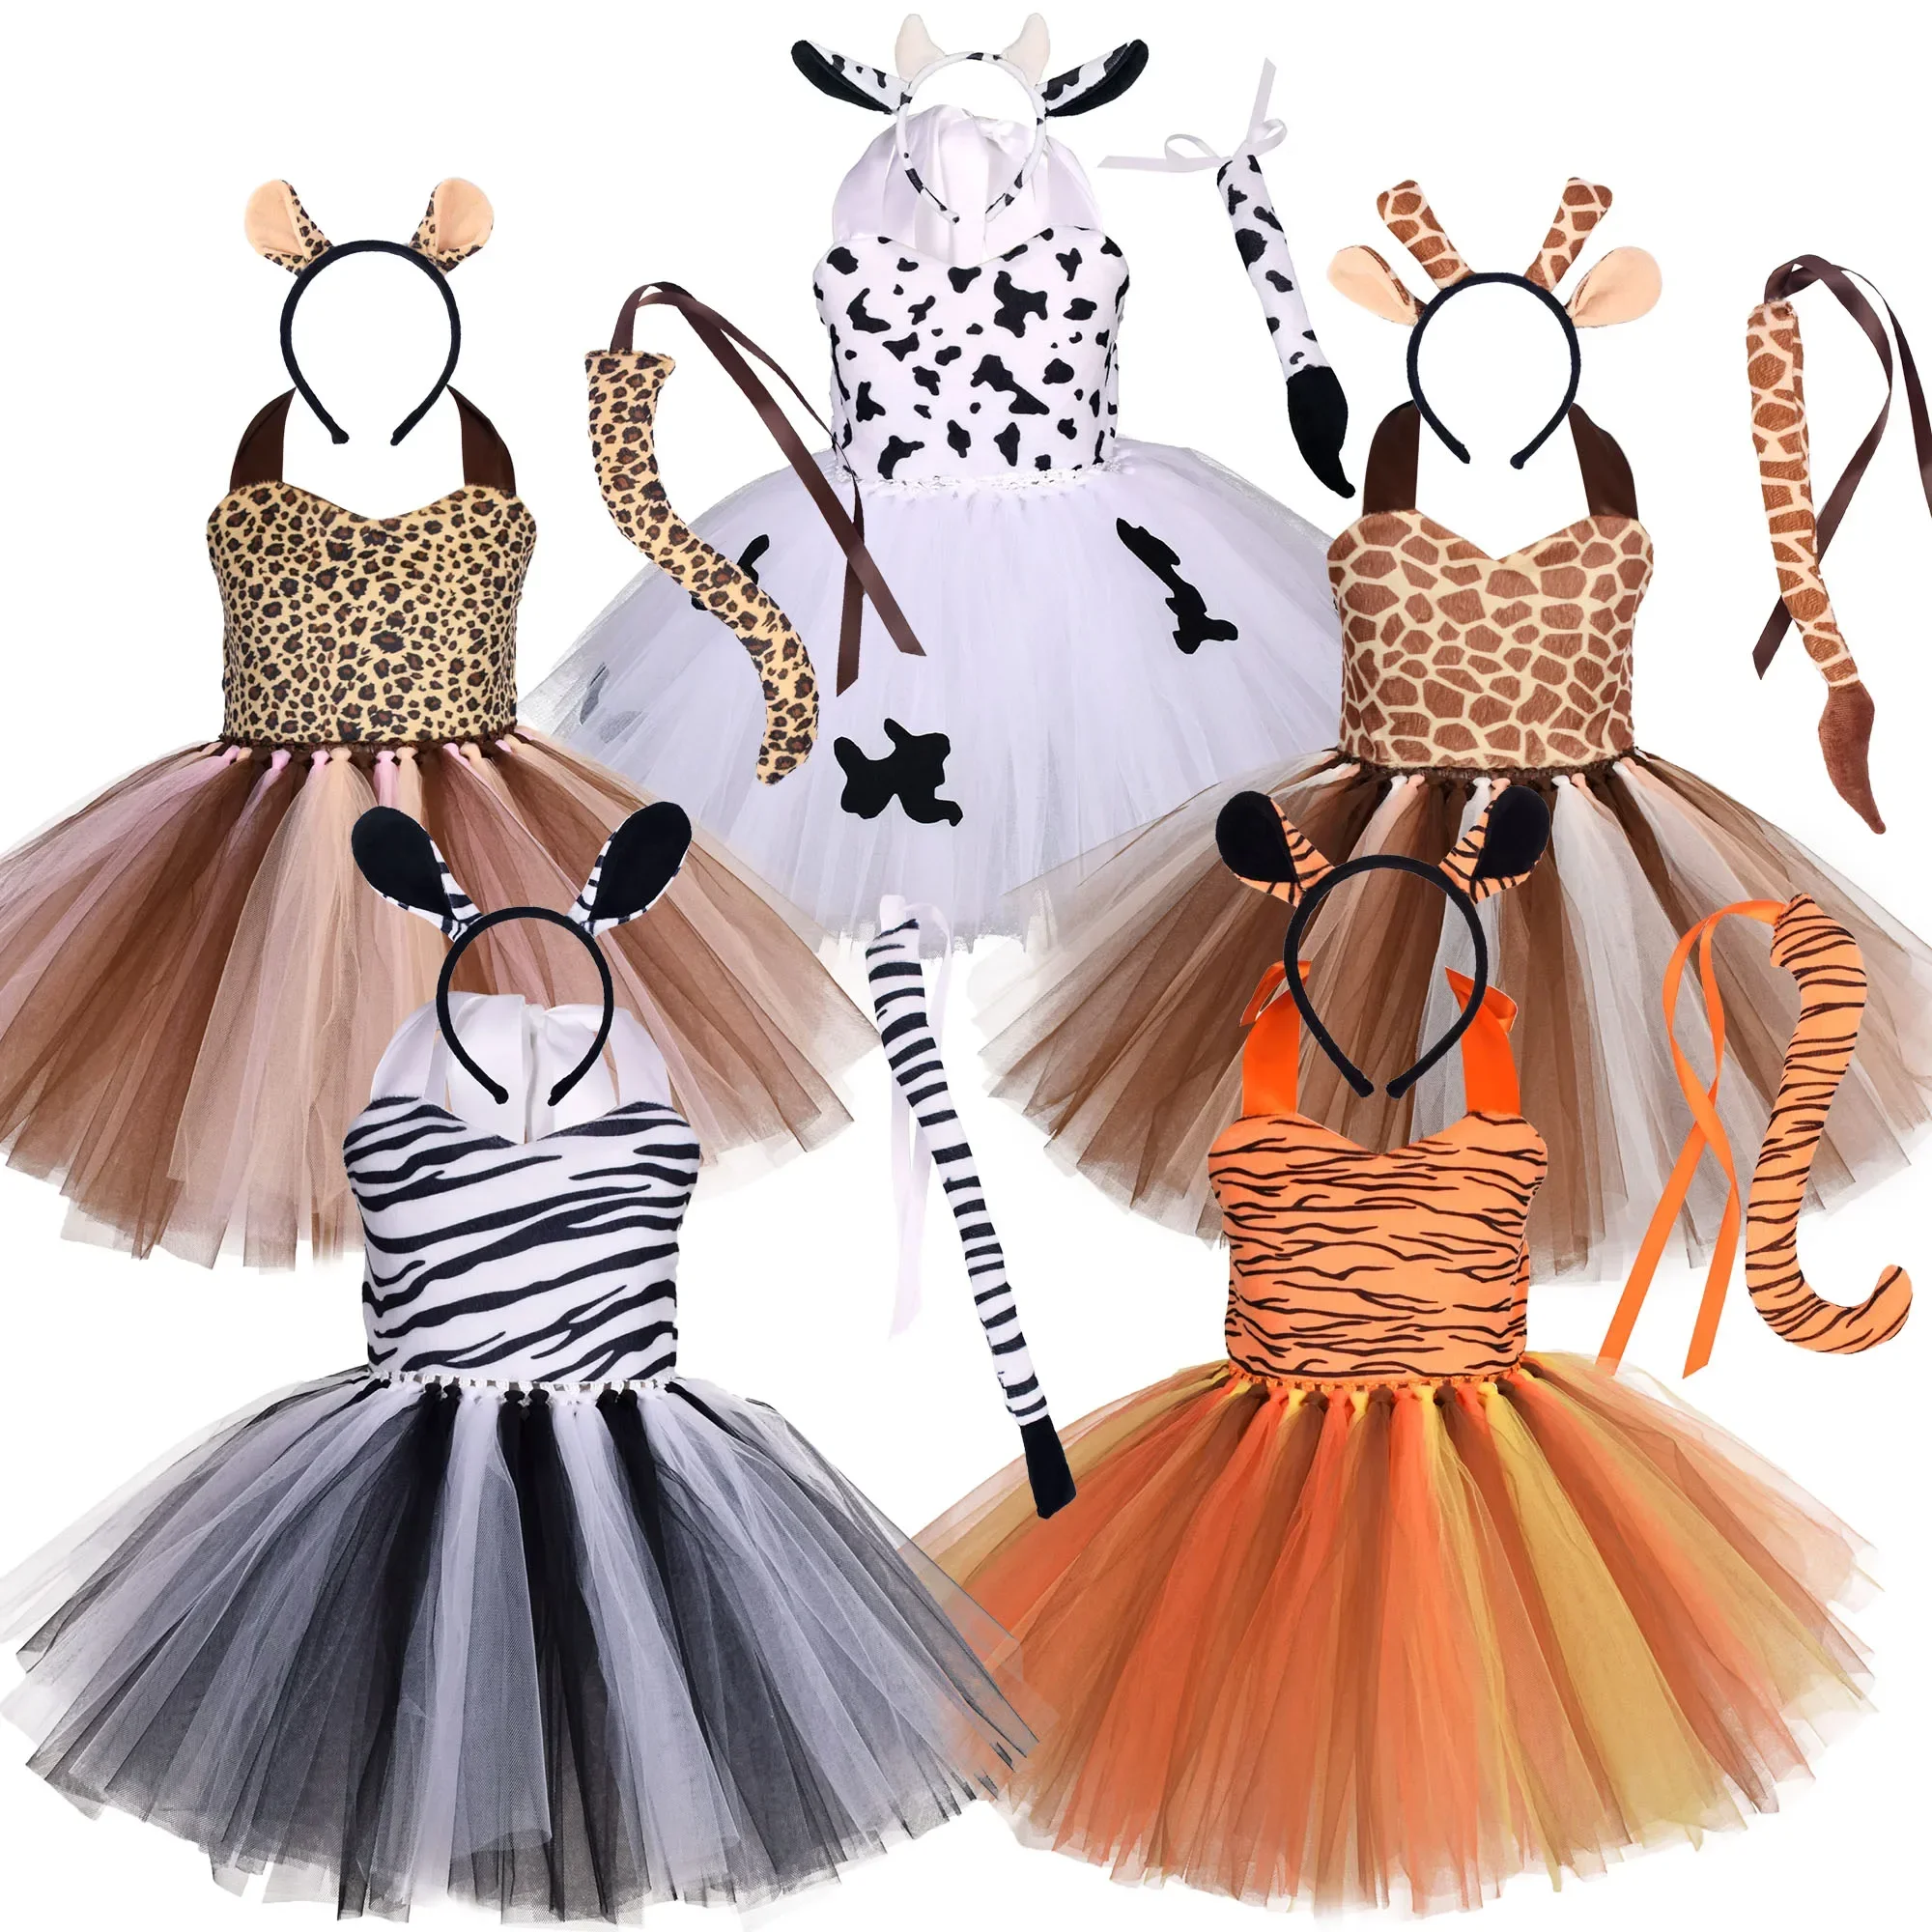 

Halloween Cosplay Animal Costume Kids Forest Theme Giraffe Cows Tiger Leopard Zebra Print Tutu Dress Baby Girls Birthday Party